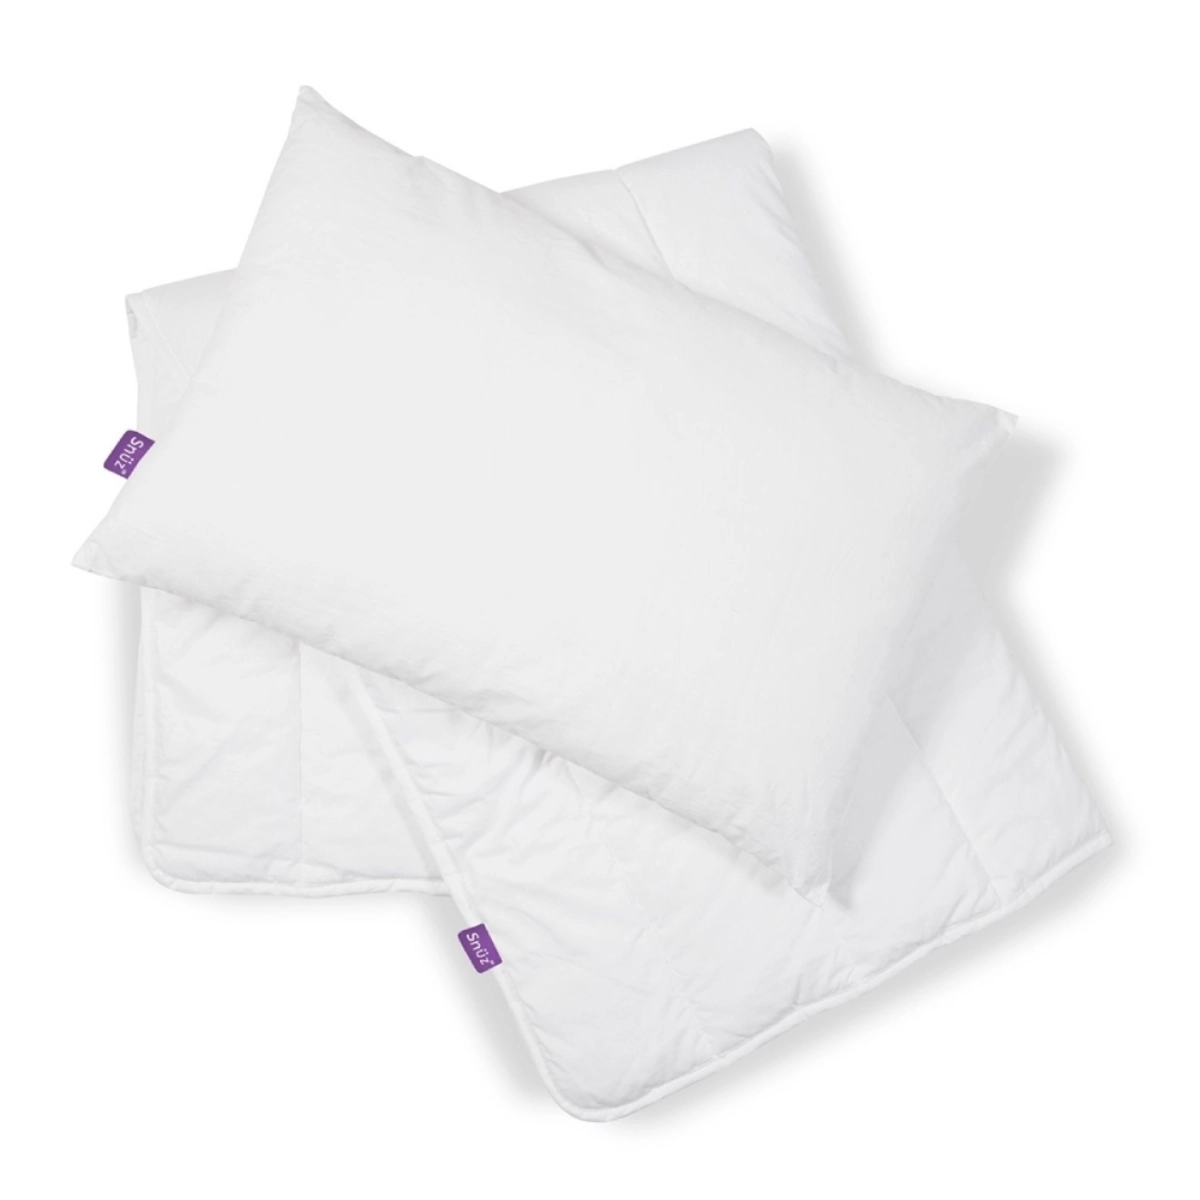 Image of Snuz Duvet and Pillow bundle 4.0 Tog-White